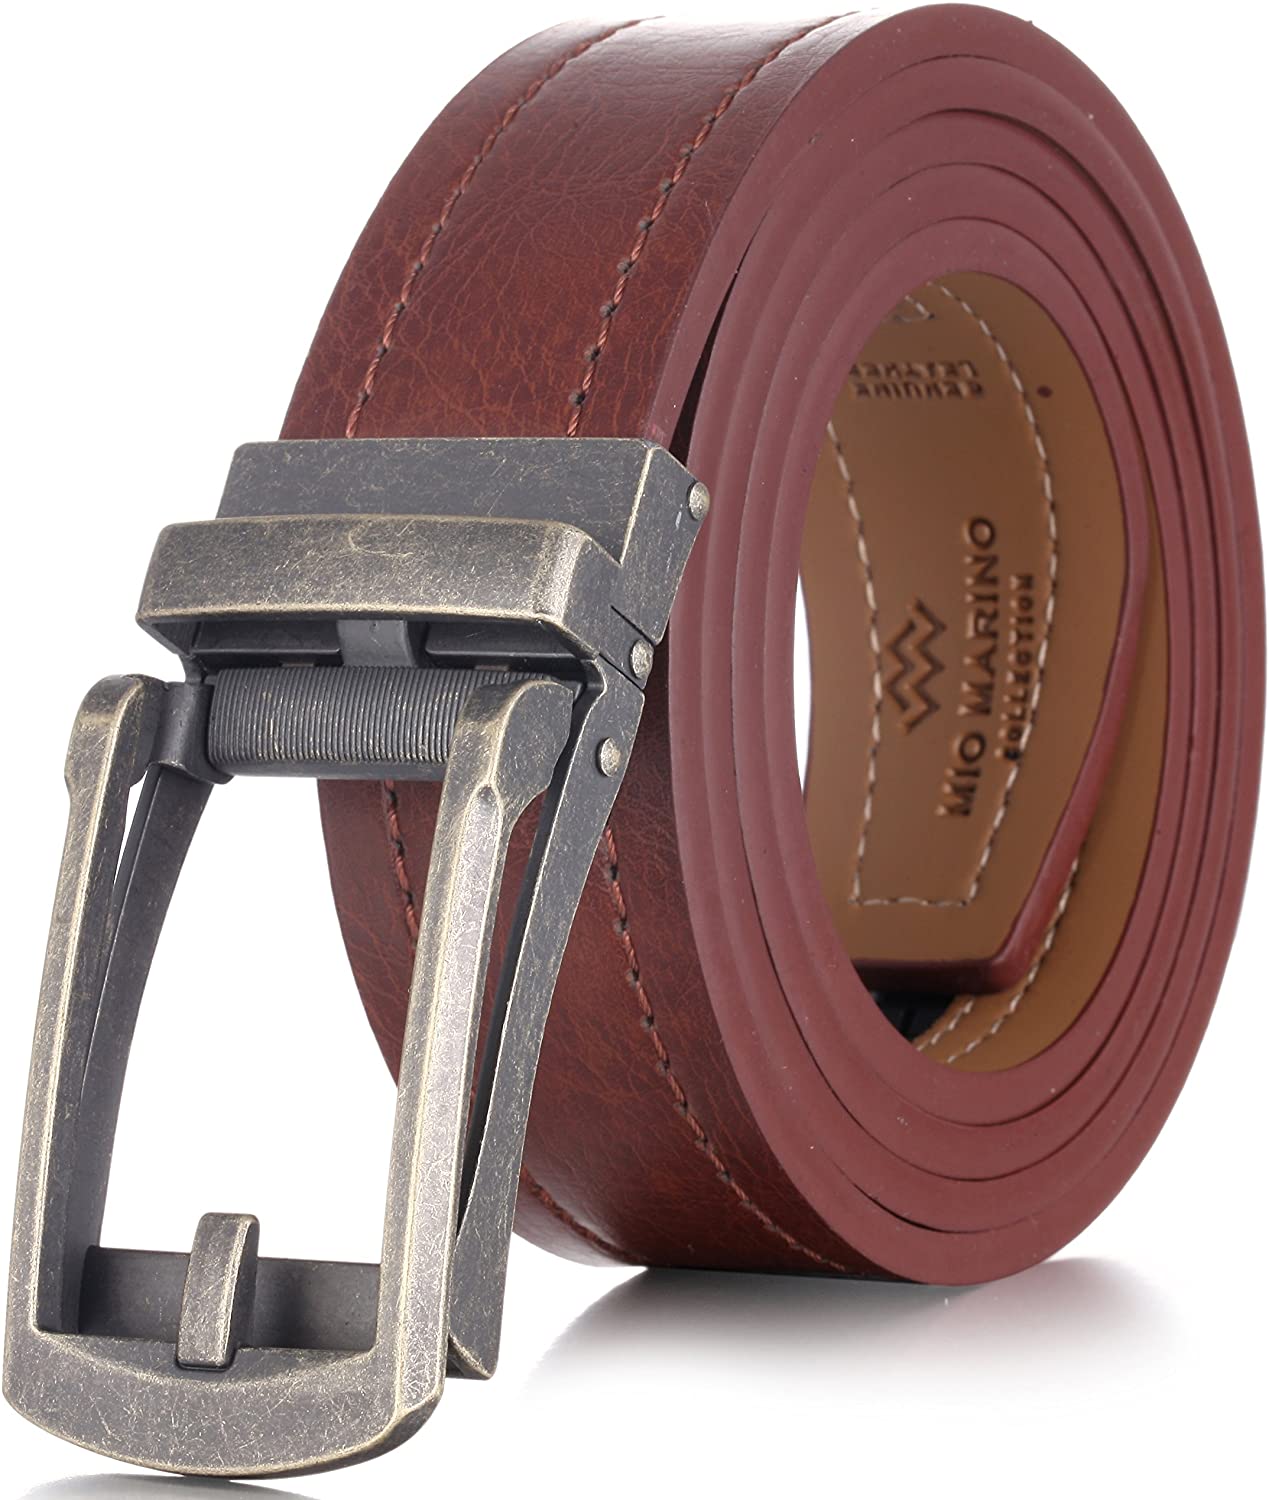 Marino Avenue Genuine Leather belt for Men 1.3/8" Wide Casual Ratchet Belt 